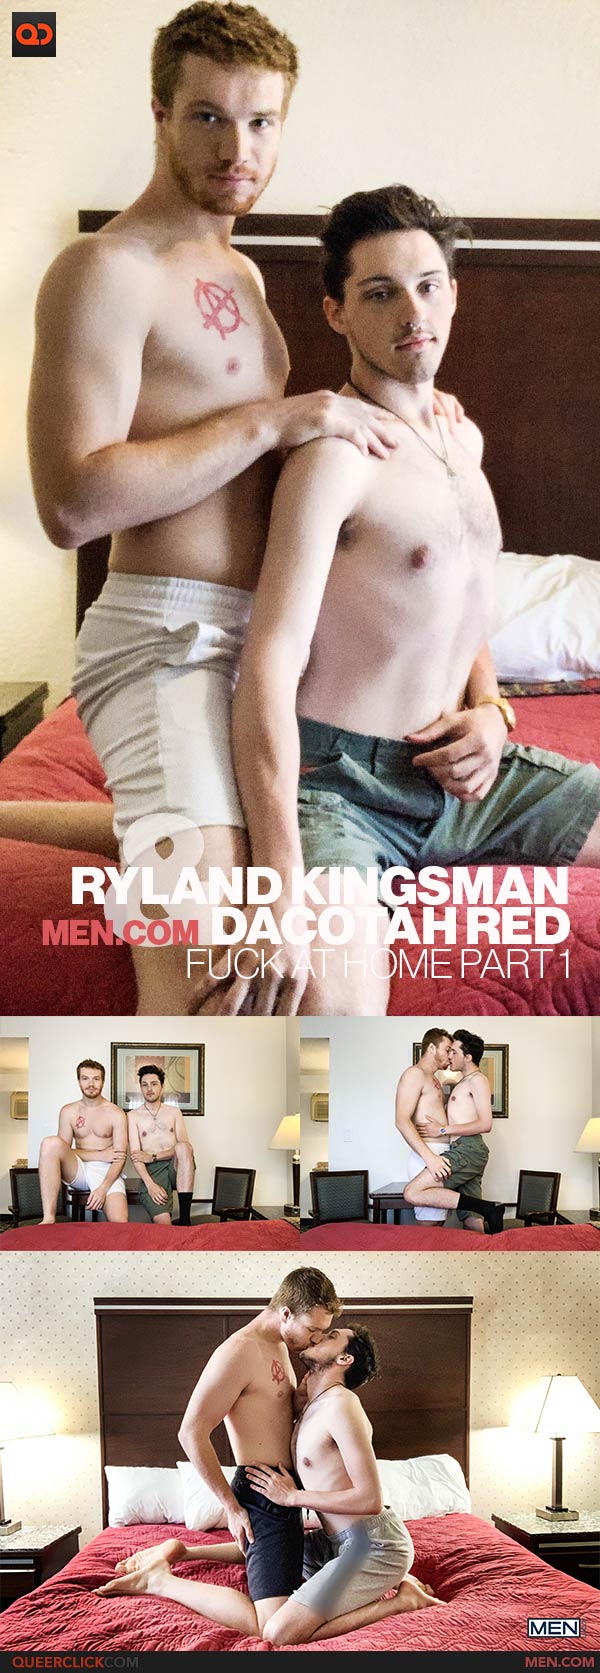 Men.com: Dacotah Red and Ryland Kingsman